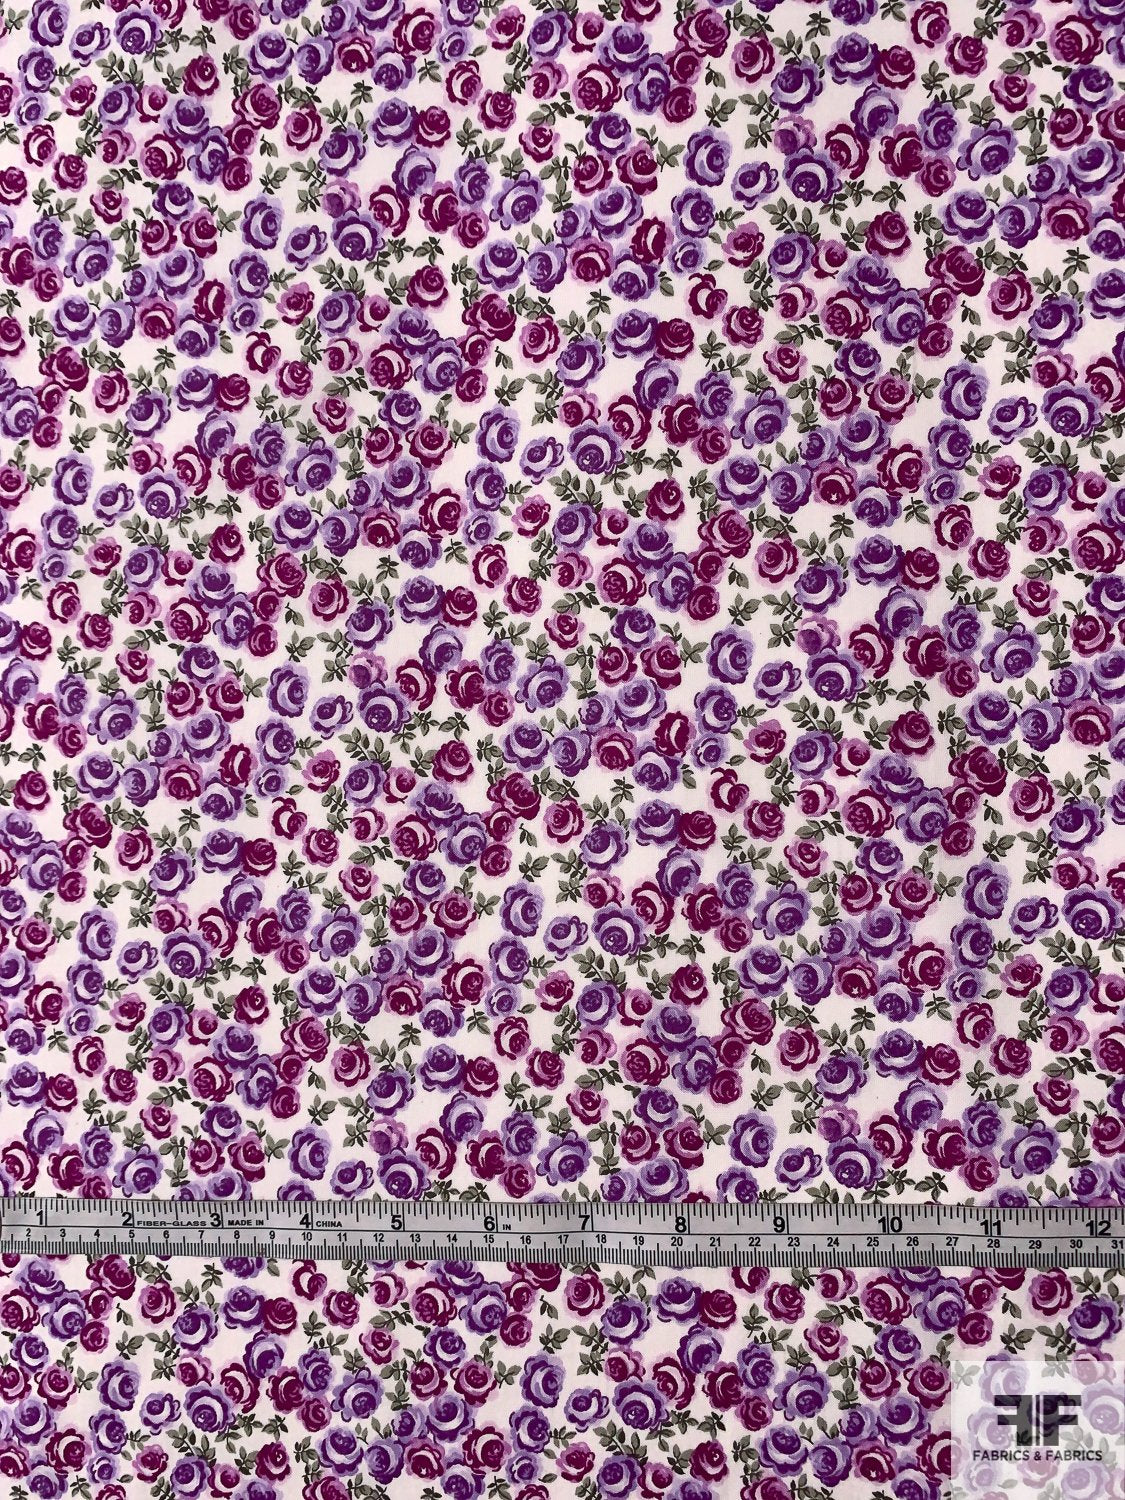 Ditsy Floral Printed Stretch Cotton Poplin - Sand/Green/Lavender